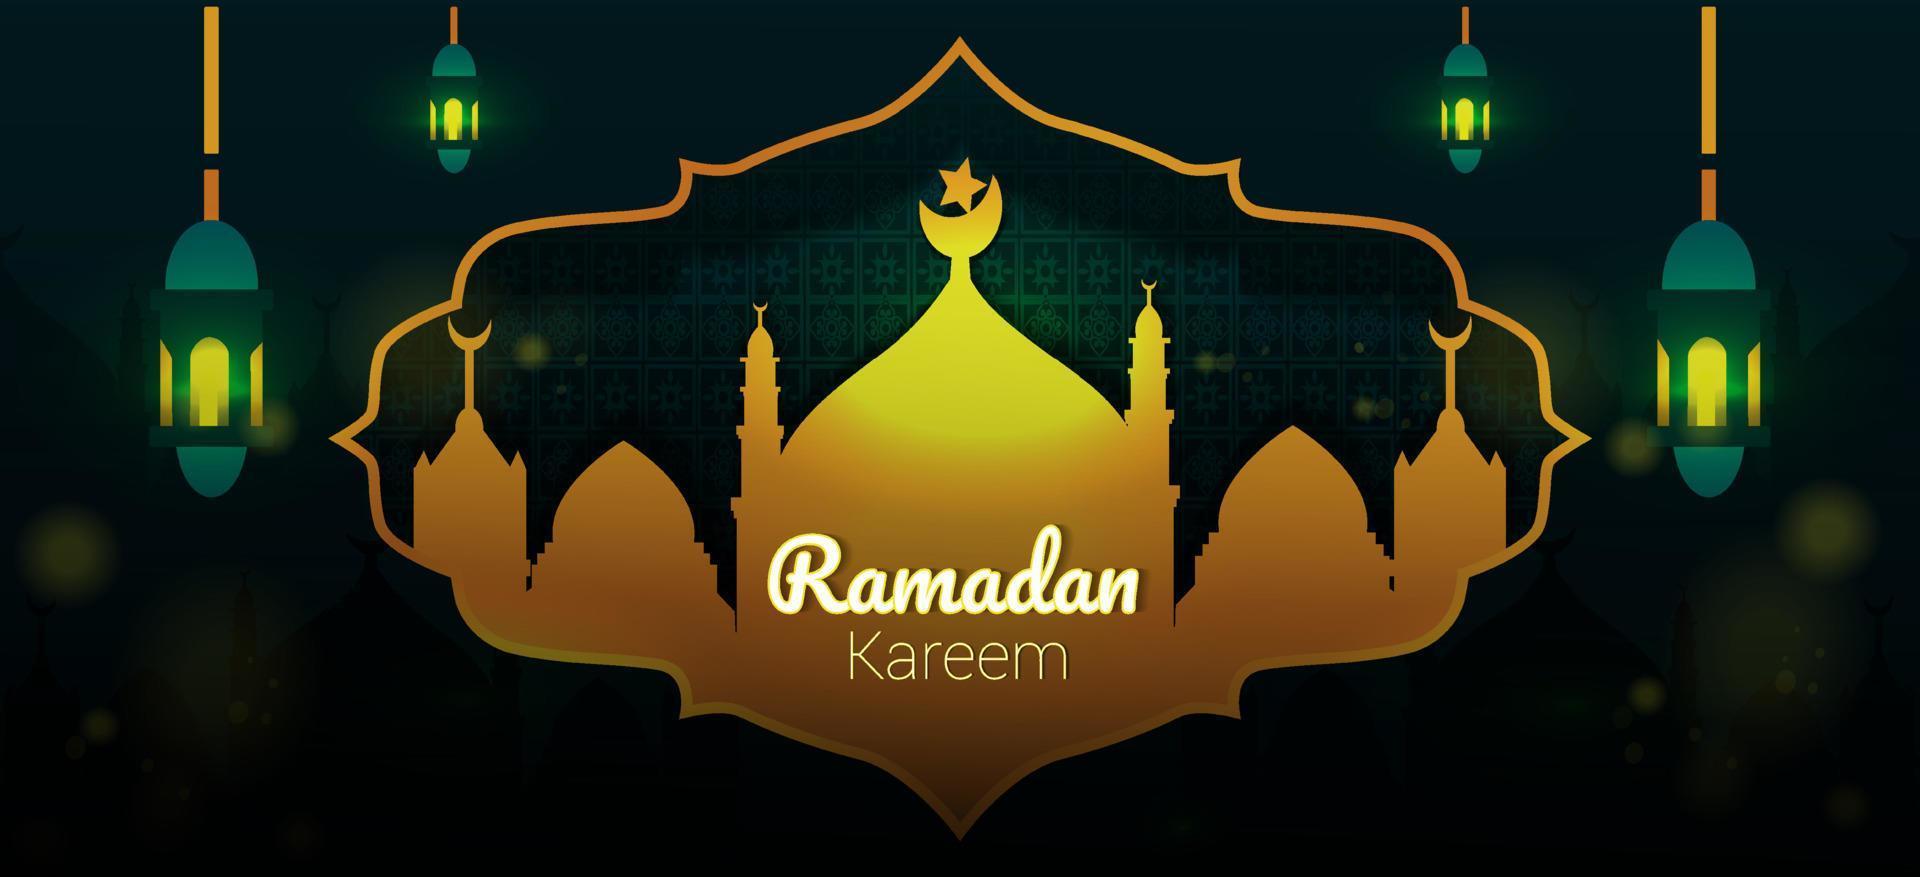 Ramadan kareem golden mosque festival background vector